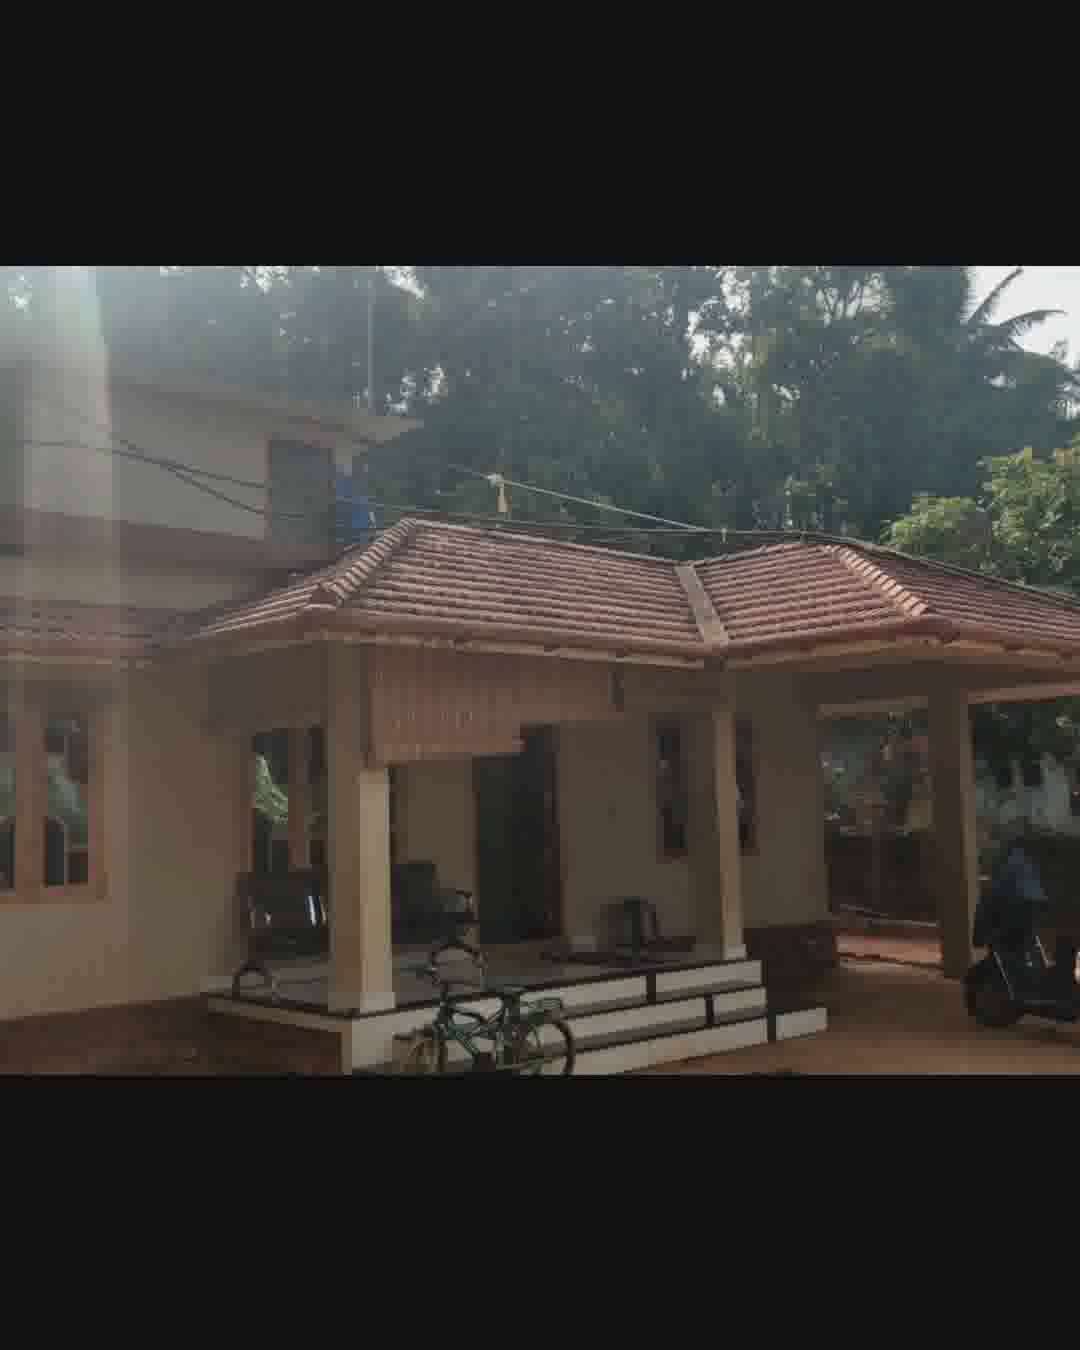 New Renovation Project wayanad
#Renovation #wayanad #KeralaStyleHouse #colonialstyle 
#trending#3d#viral#kerala#calicut#epicstudio#renovationmajic